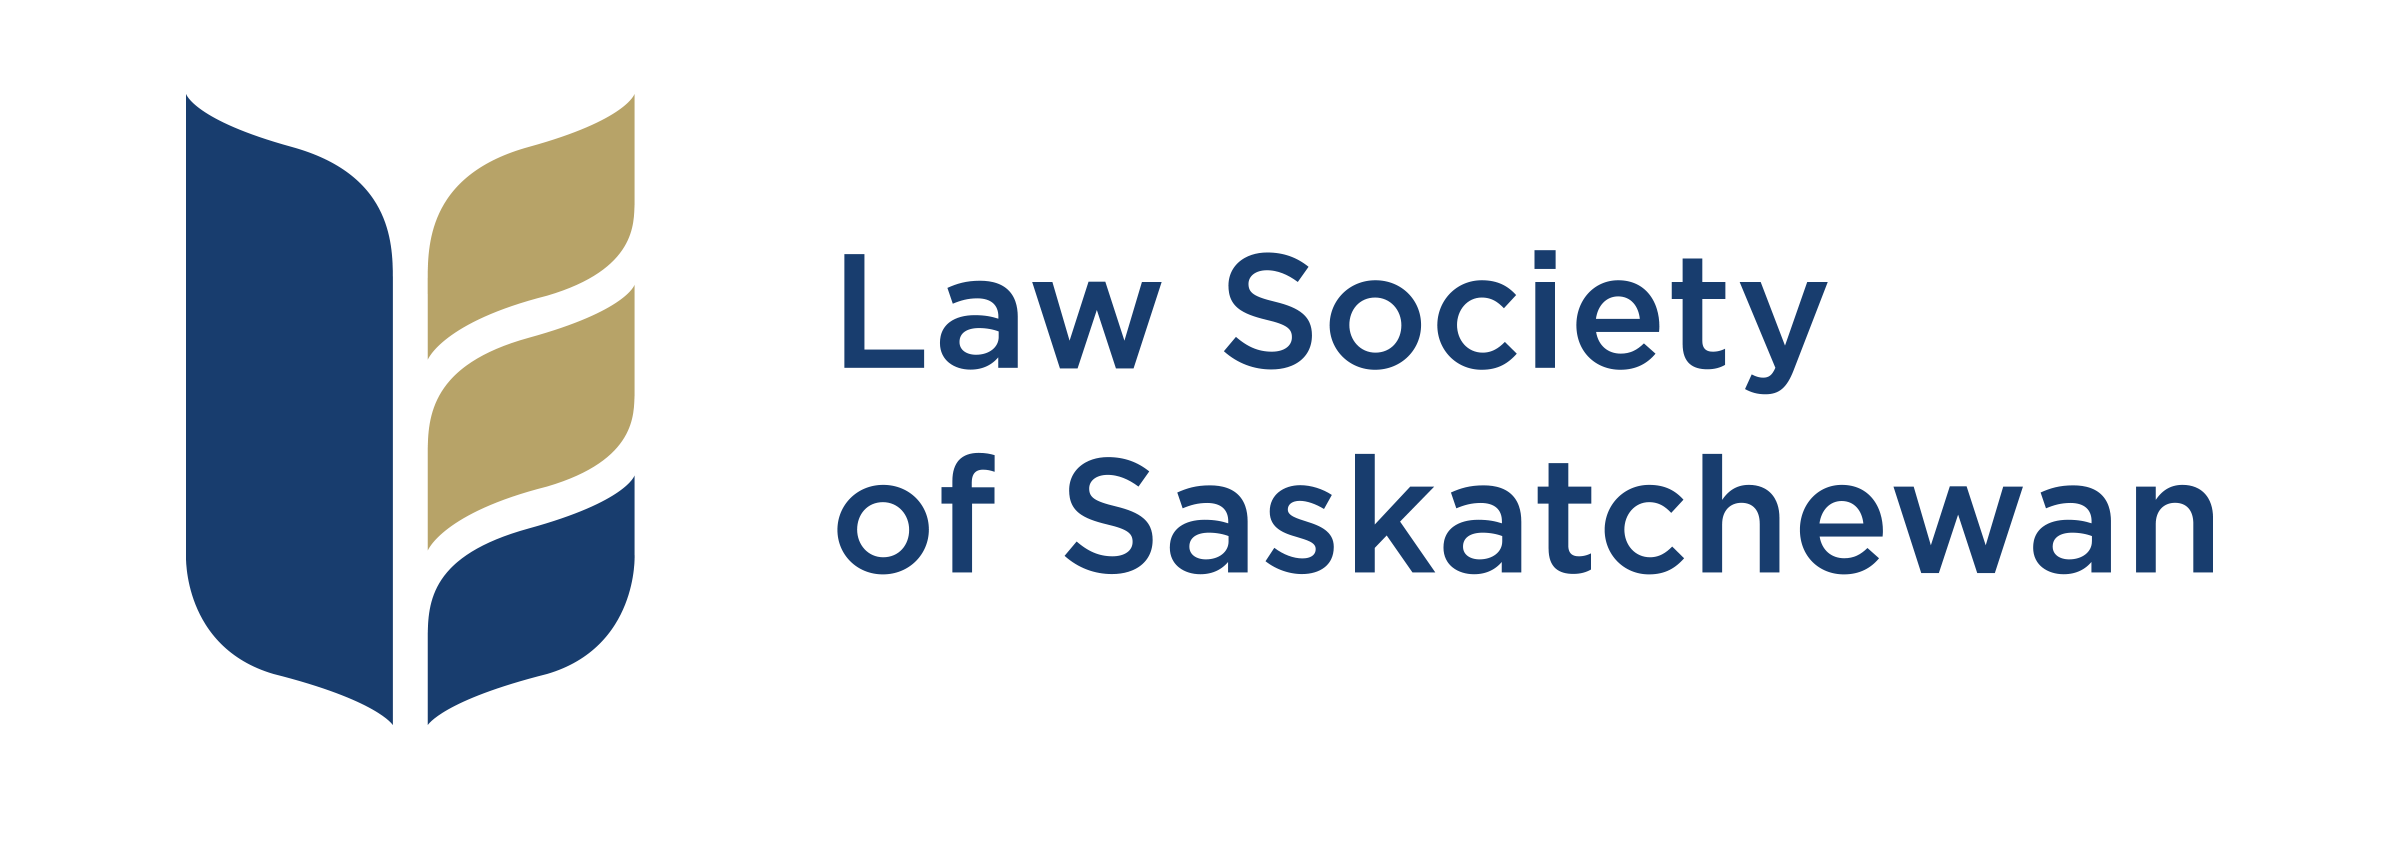 Law Society of Saskatchewan